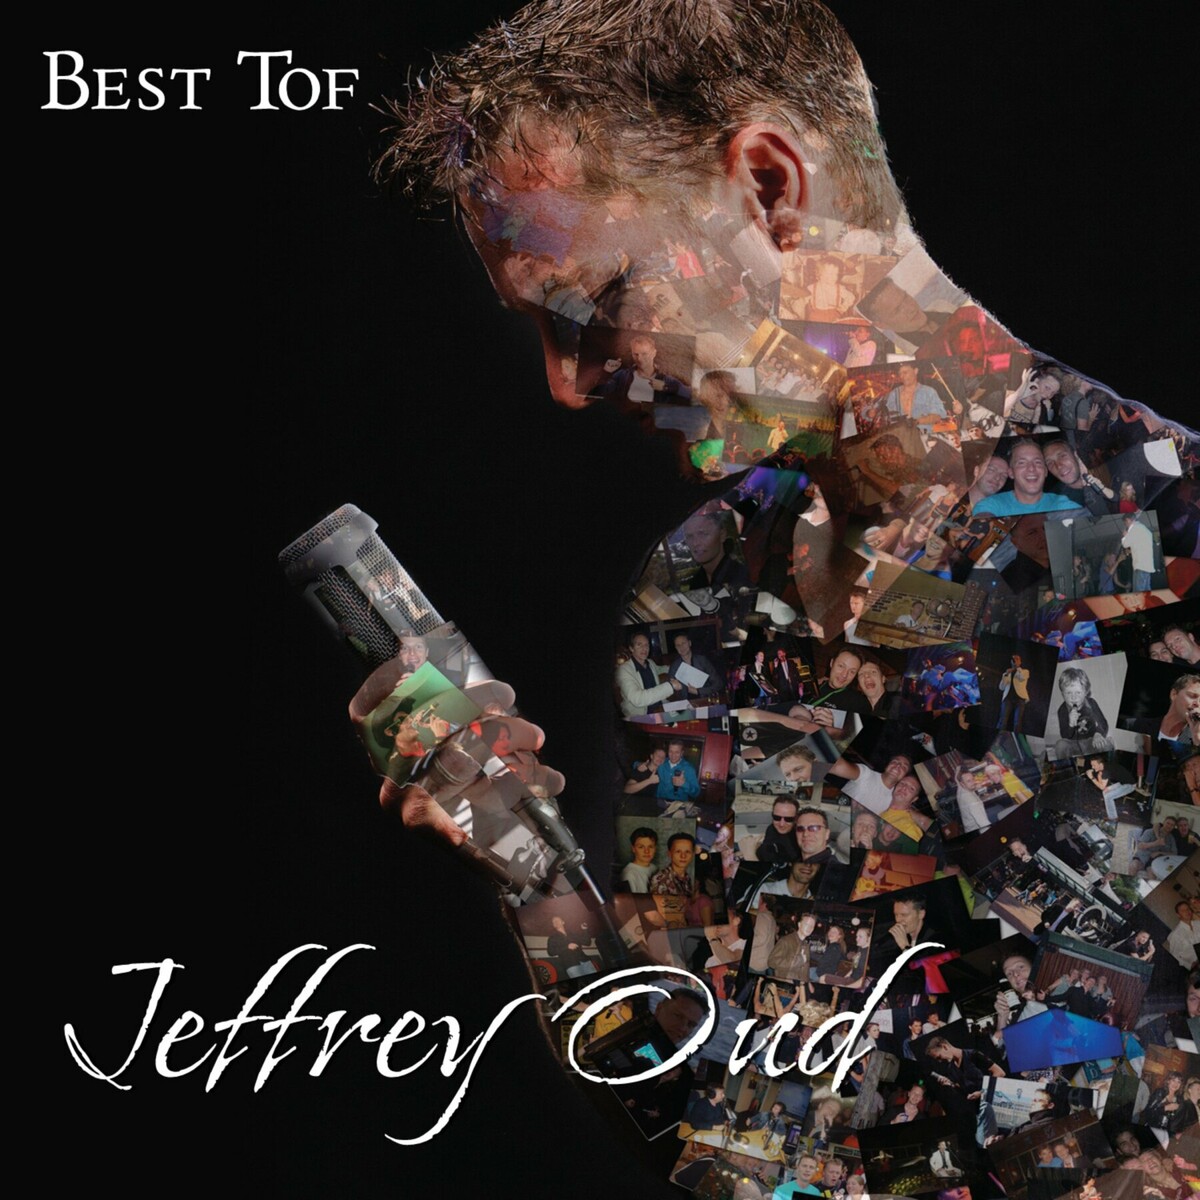 Jeffrey Oud - Best Tof